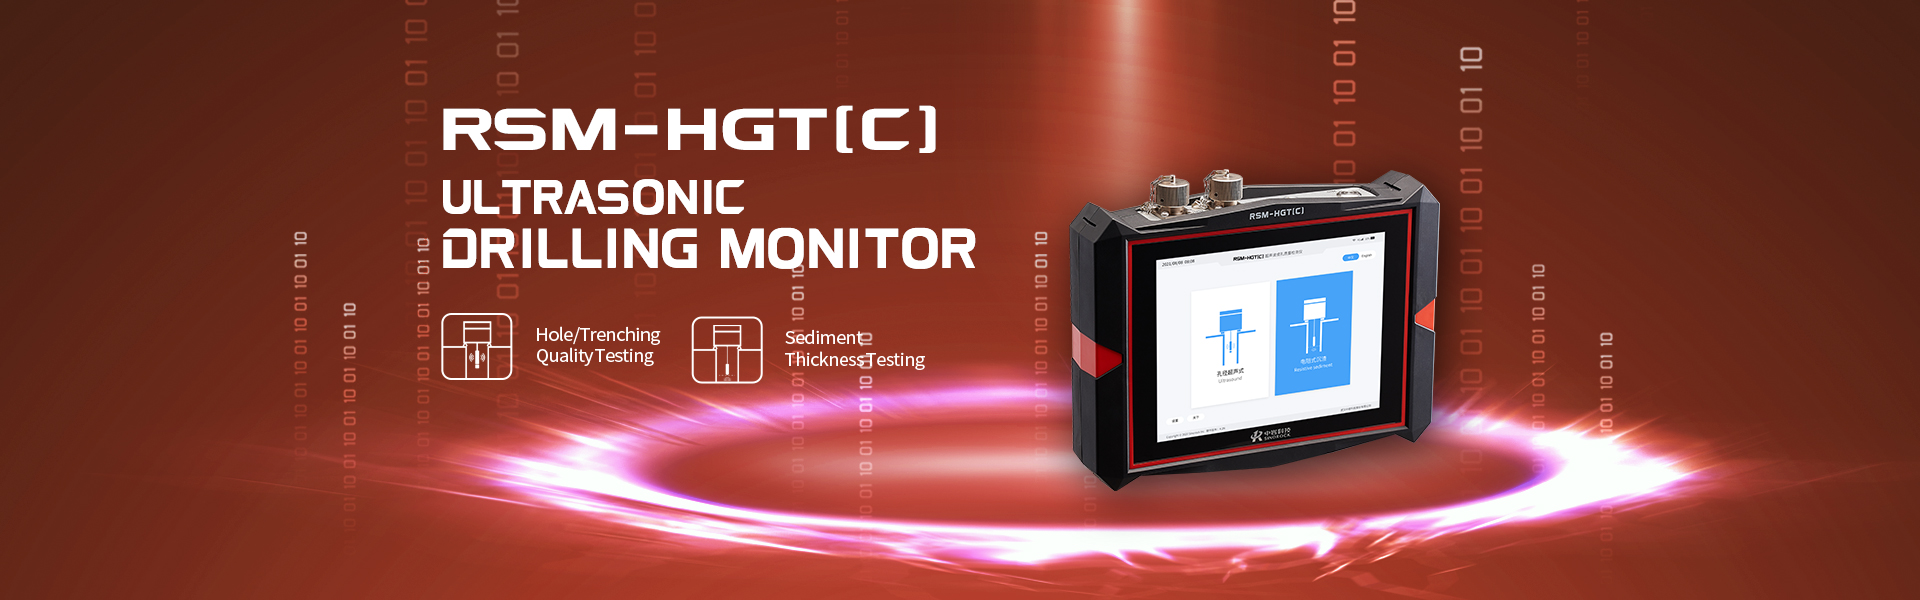 RSM-HGT (C) Ultrasonic Drilling Monitor